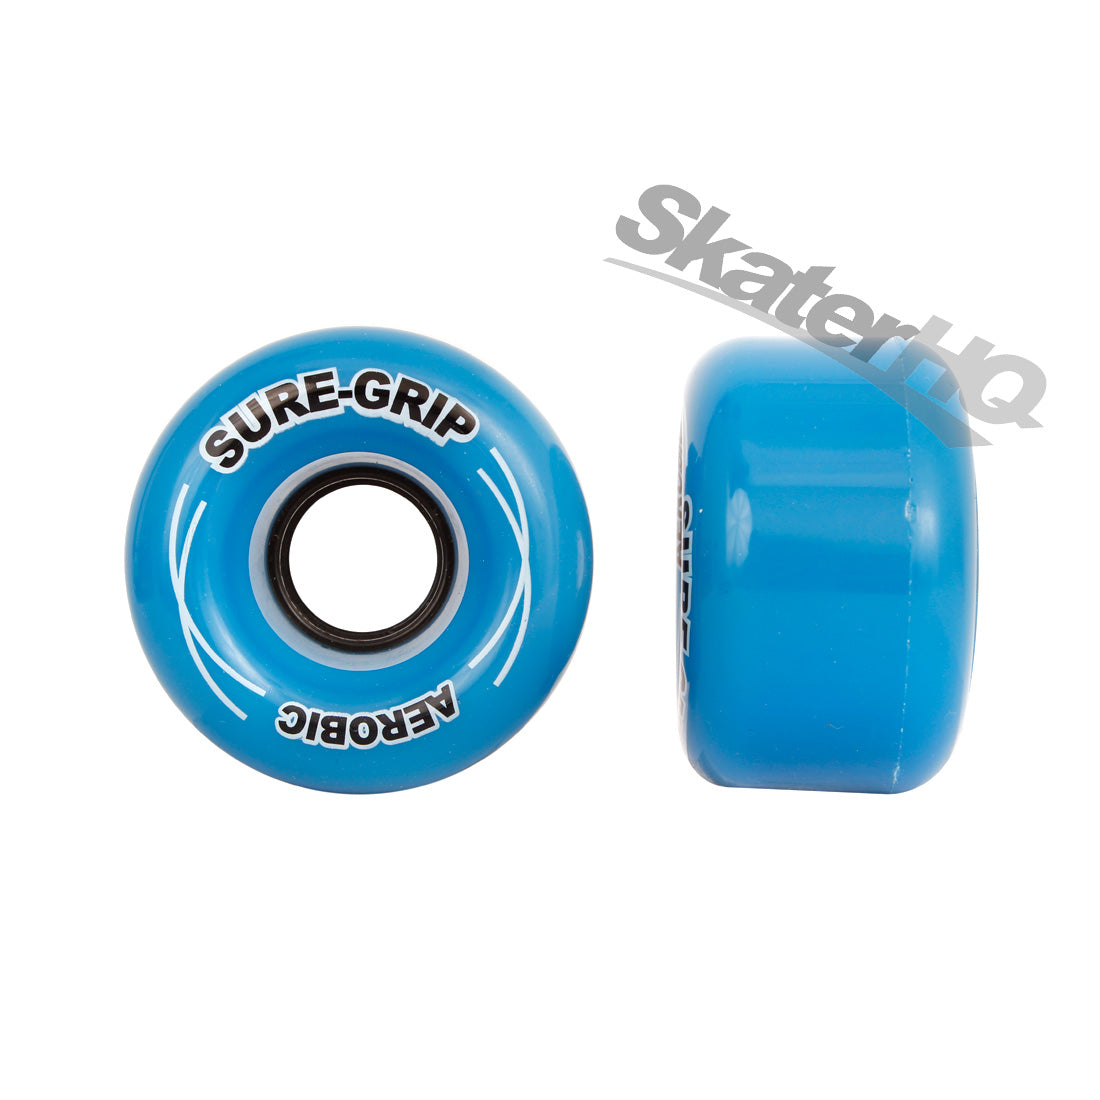 Sure-Grip Aerobic 62mm/85A Blue - 4pk Roller Skate Wheels